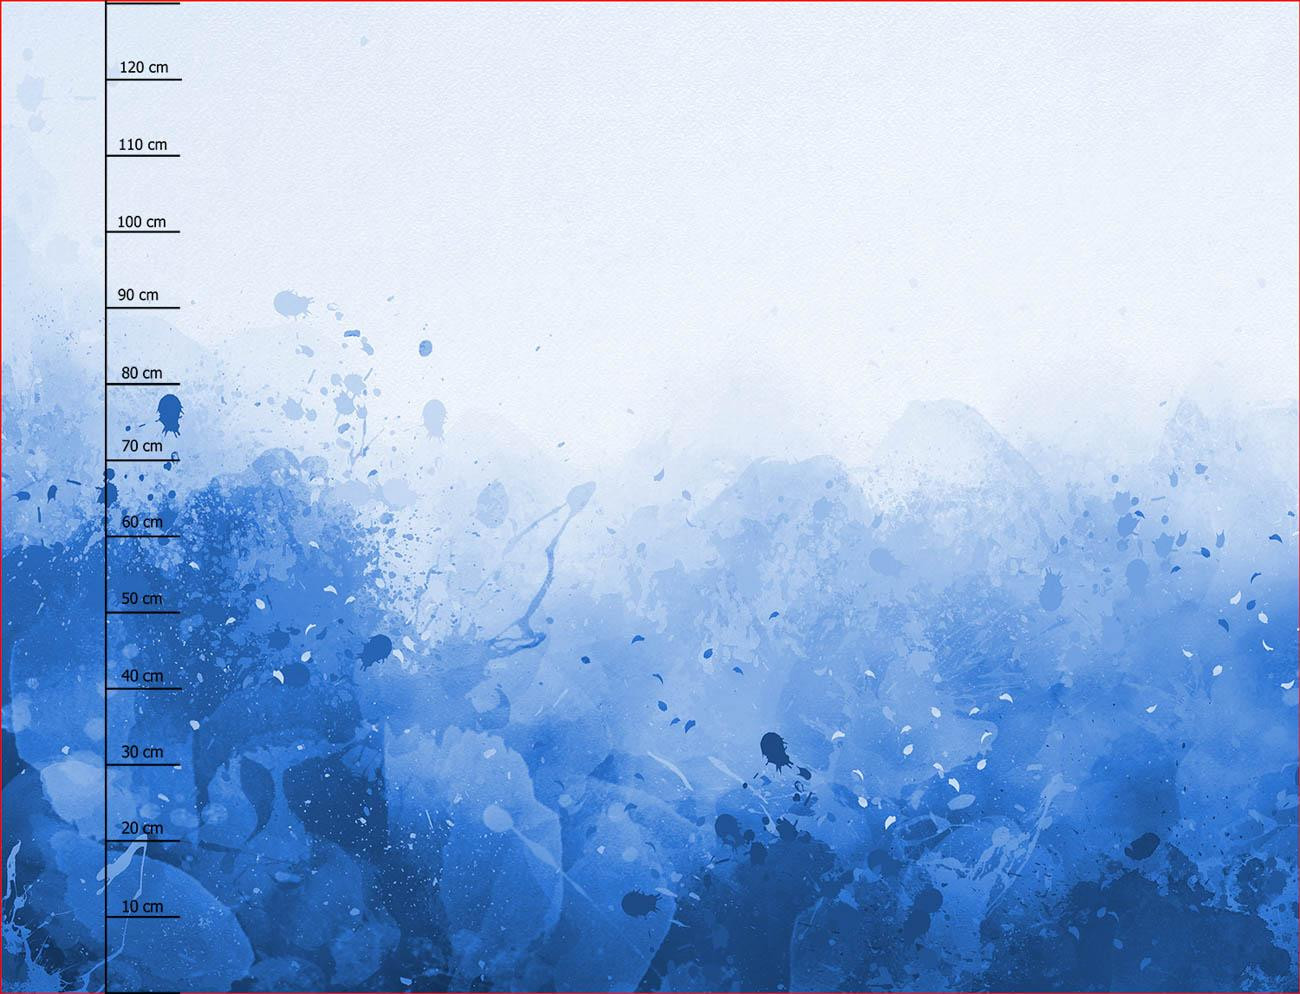 KLEKSY (classic blue) - panel sukienkowy